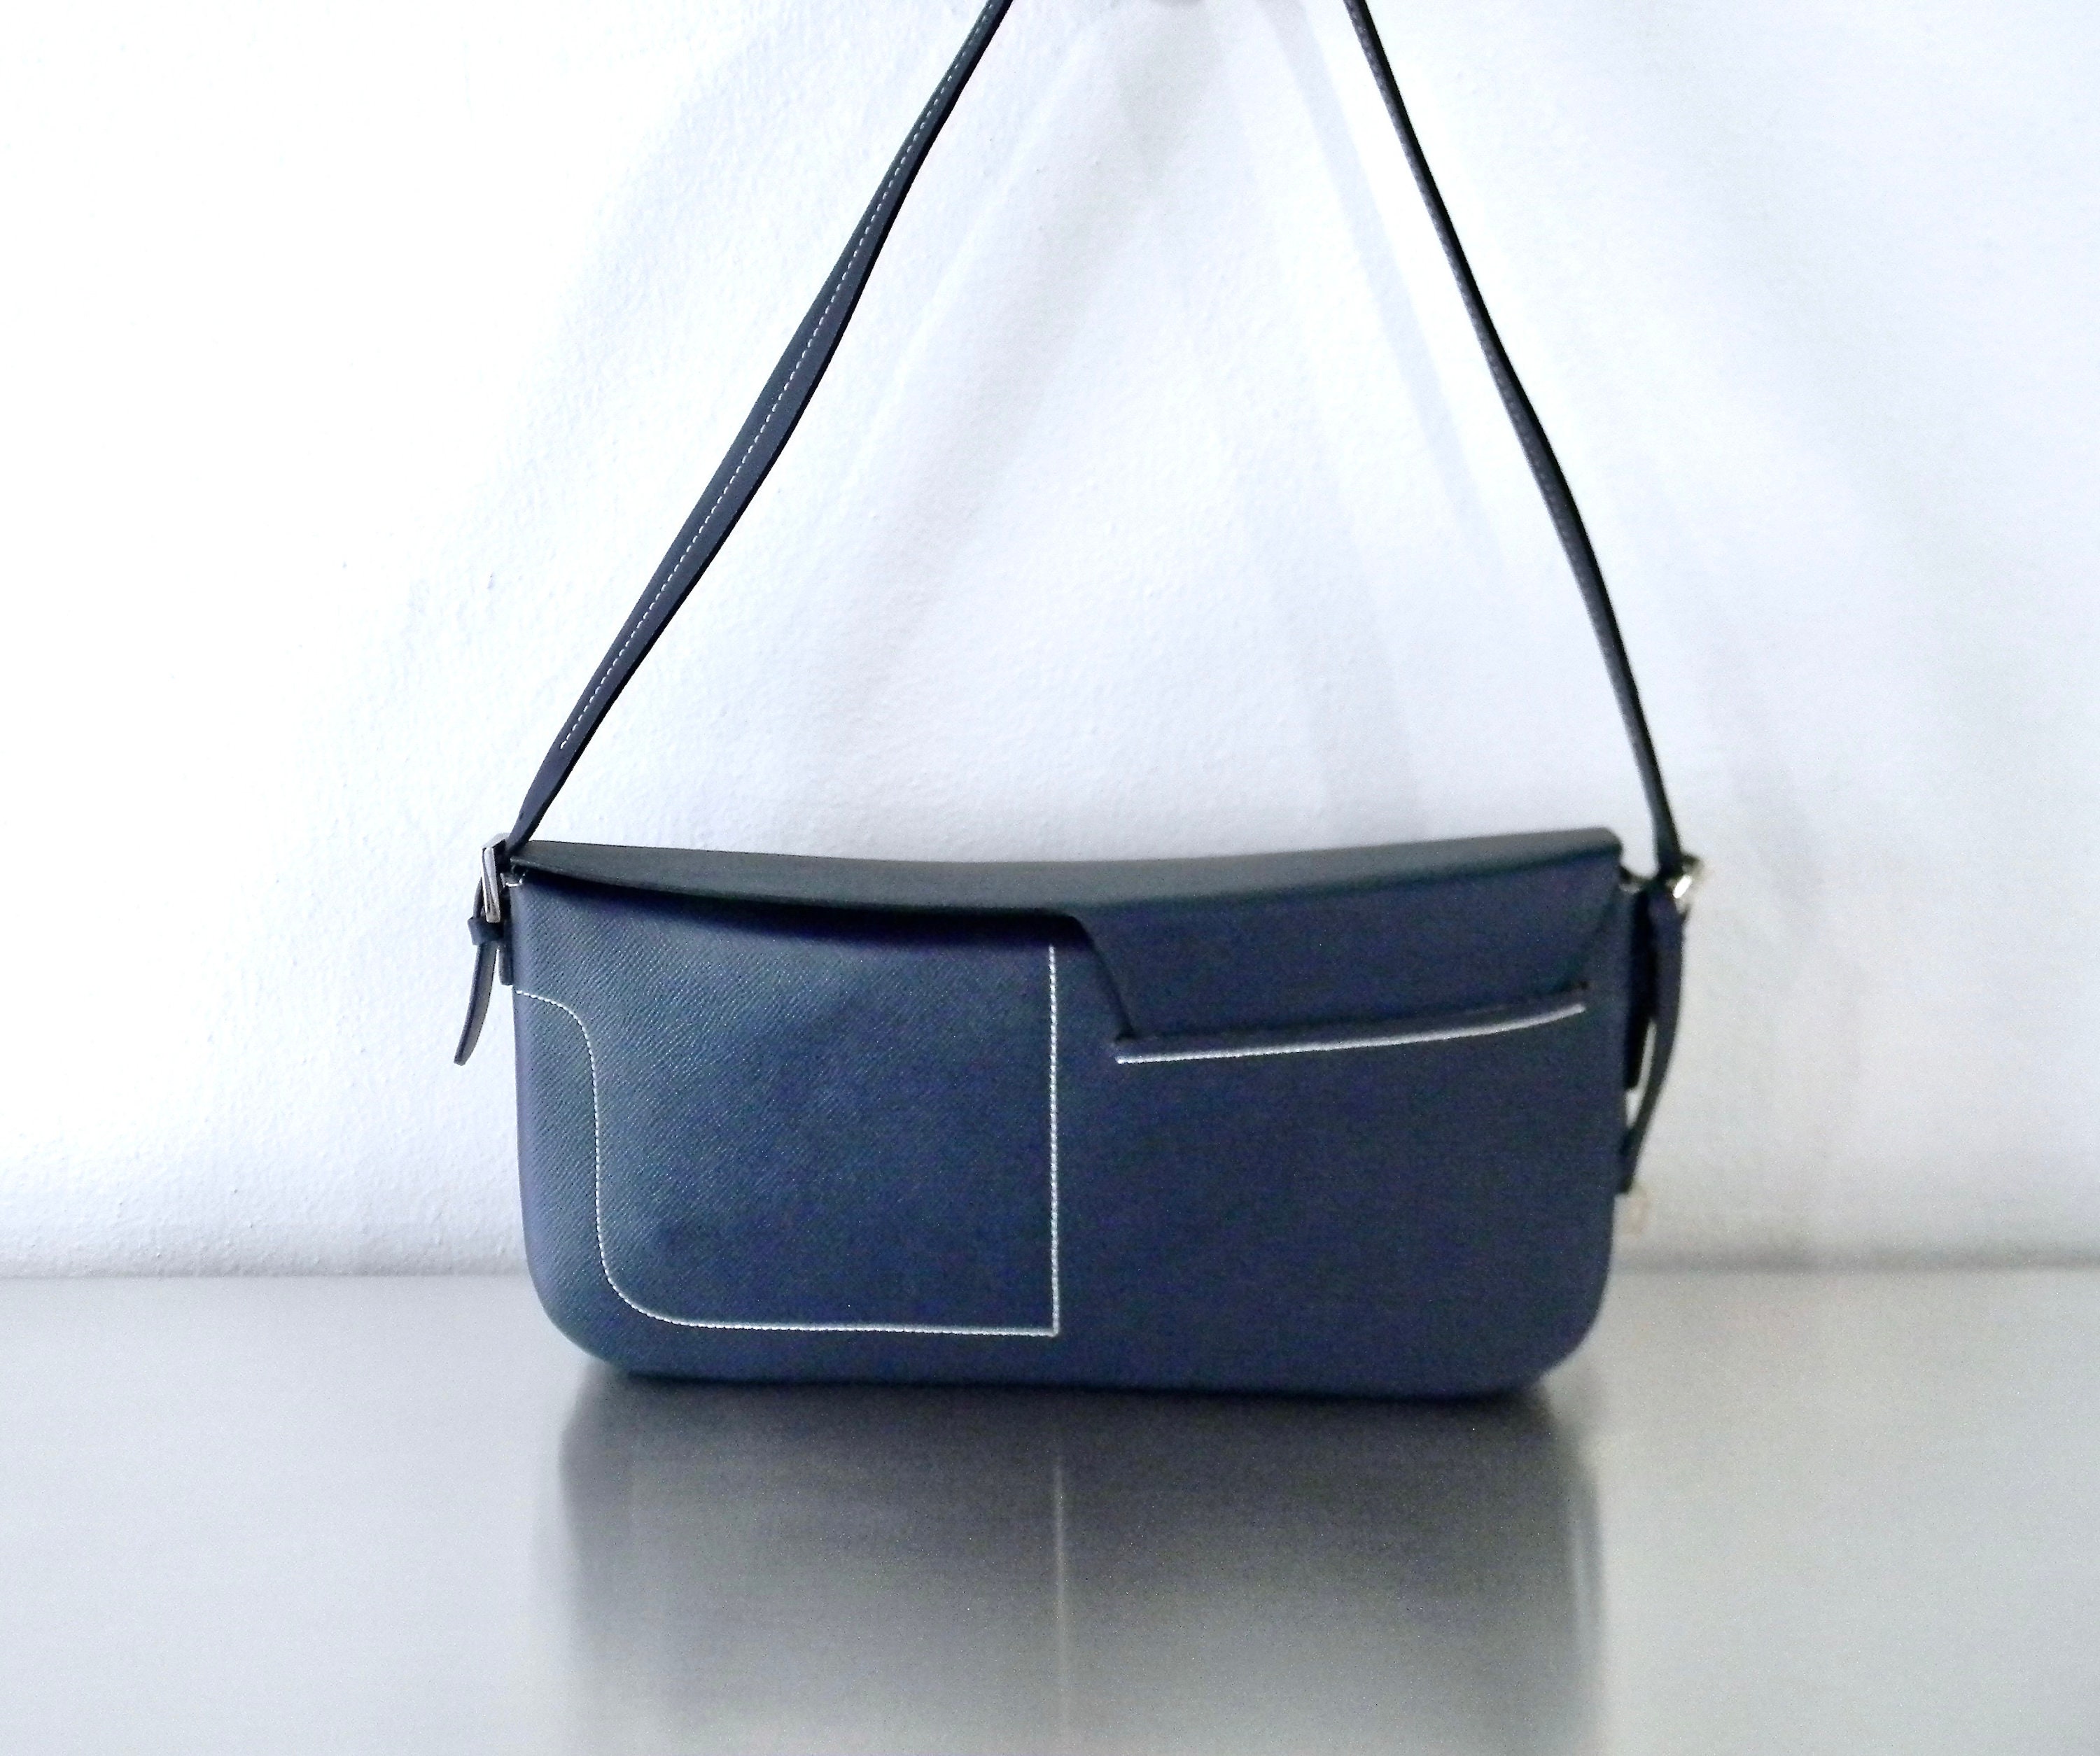 Vintage Retro Y2K 1990s Louis Cardy Baguette Style Small Beige Leather Purse Evening Lady Bag Handbag